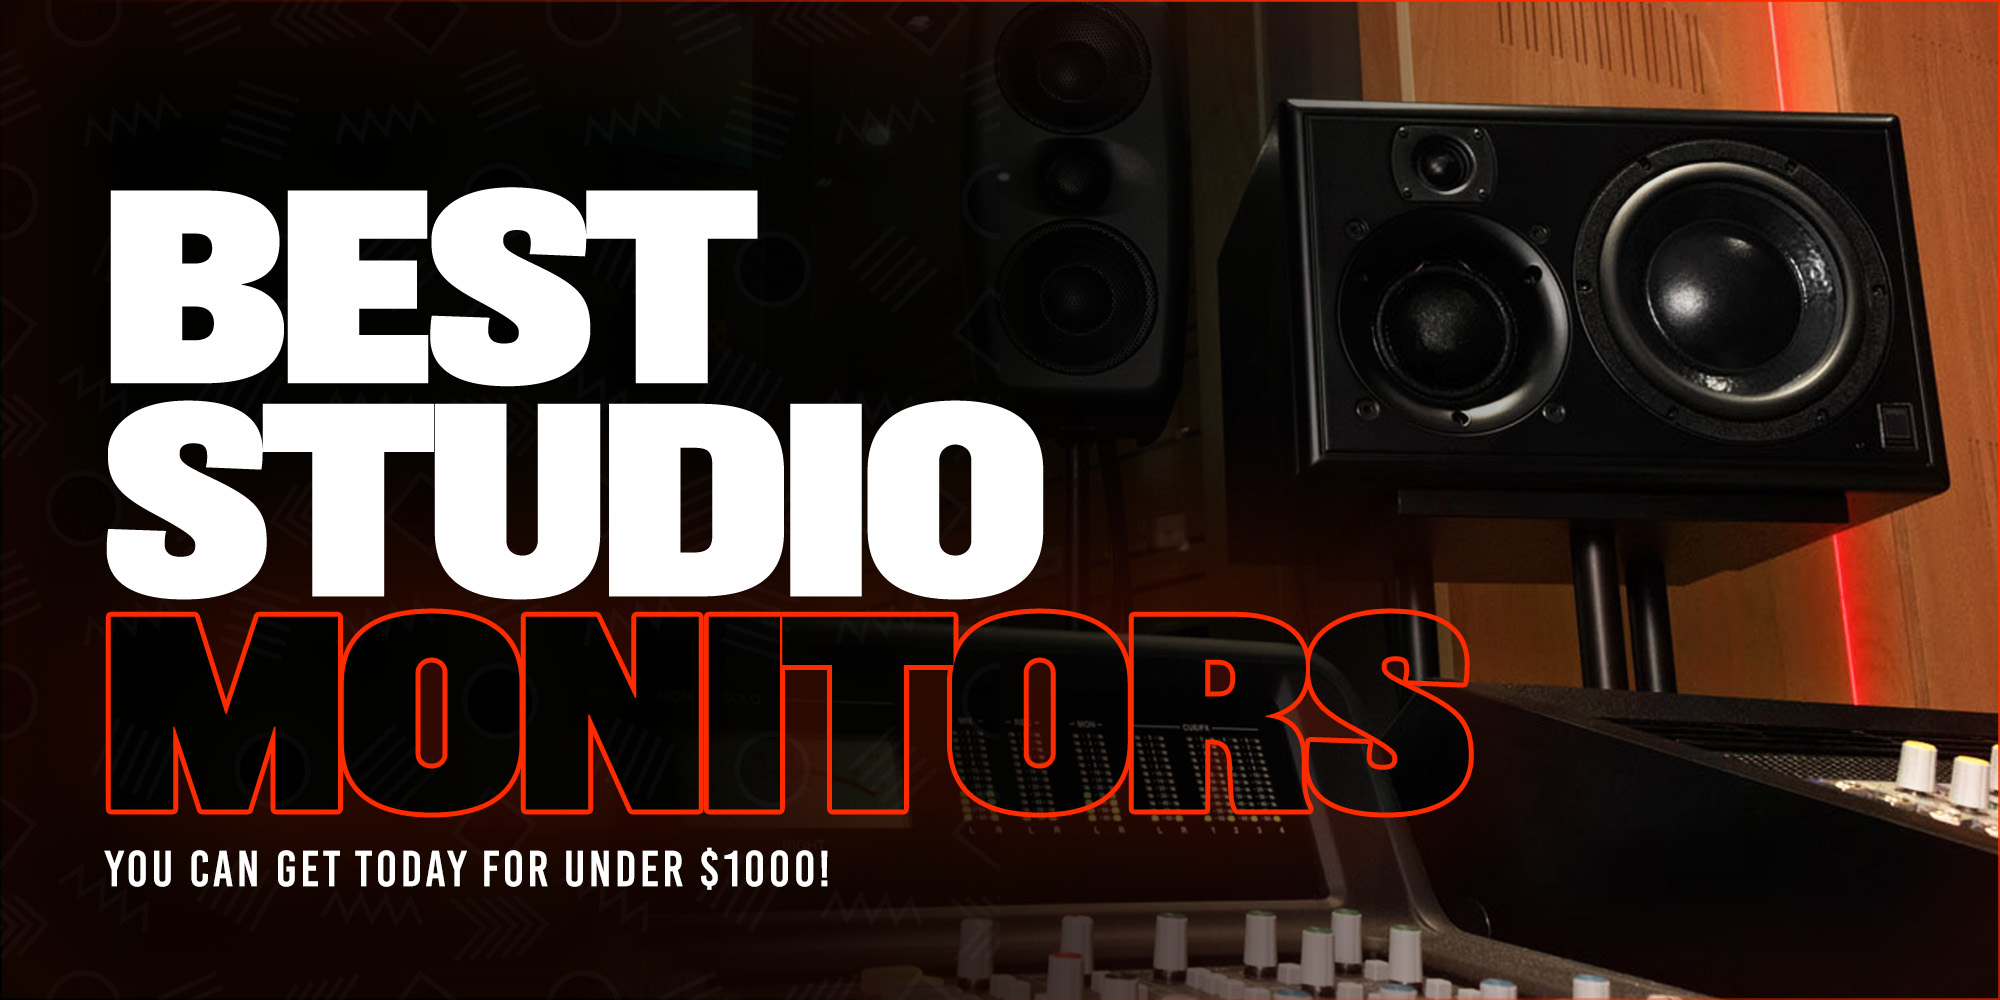 Best Studio Monitors for under $1000